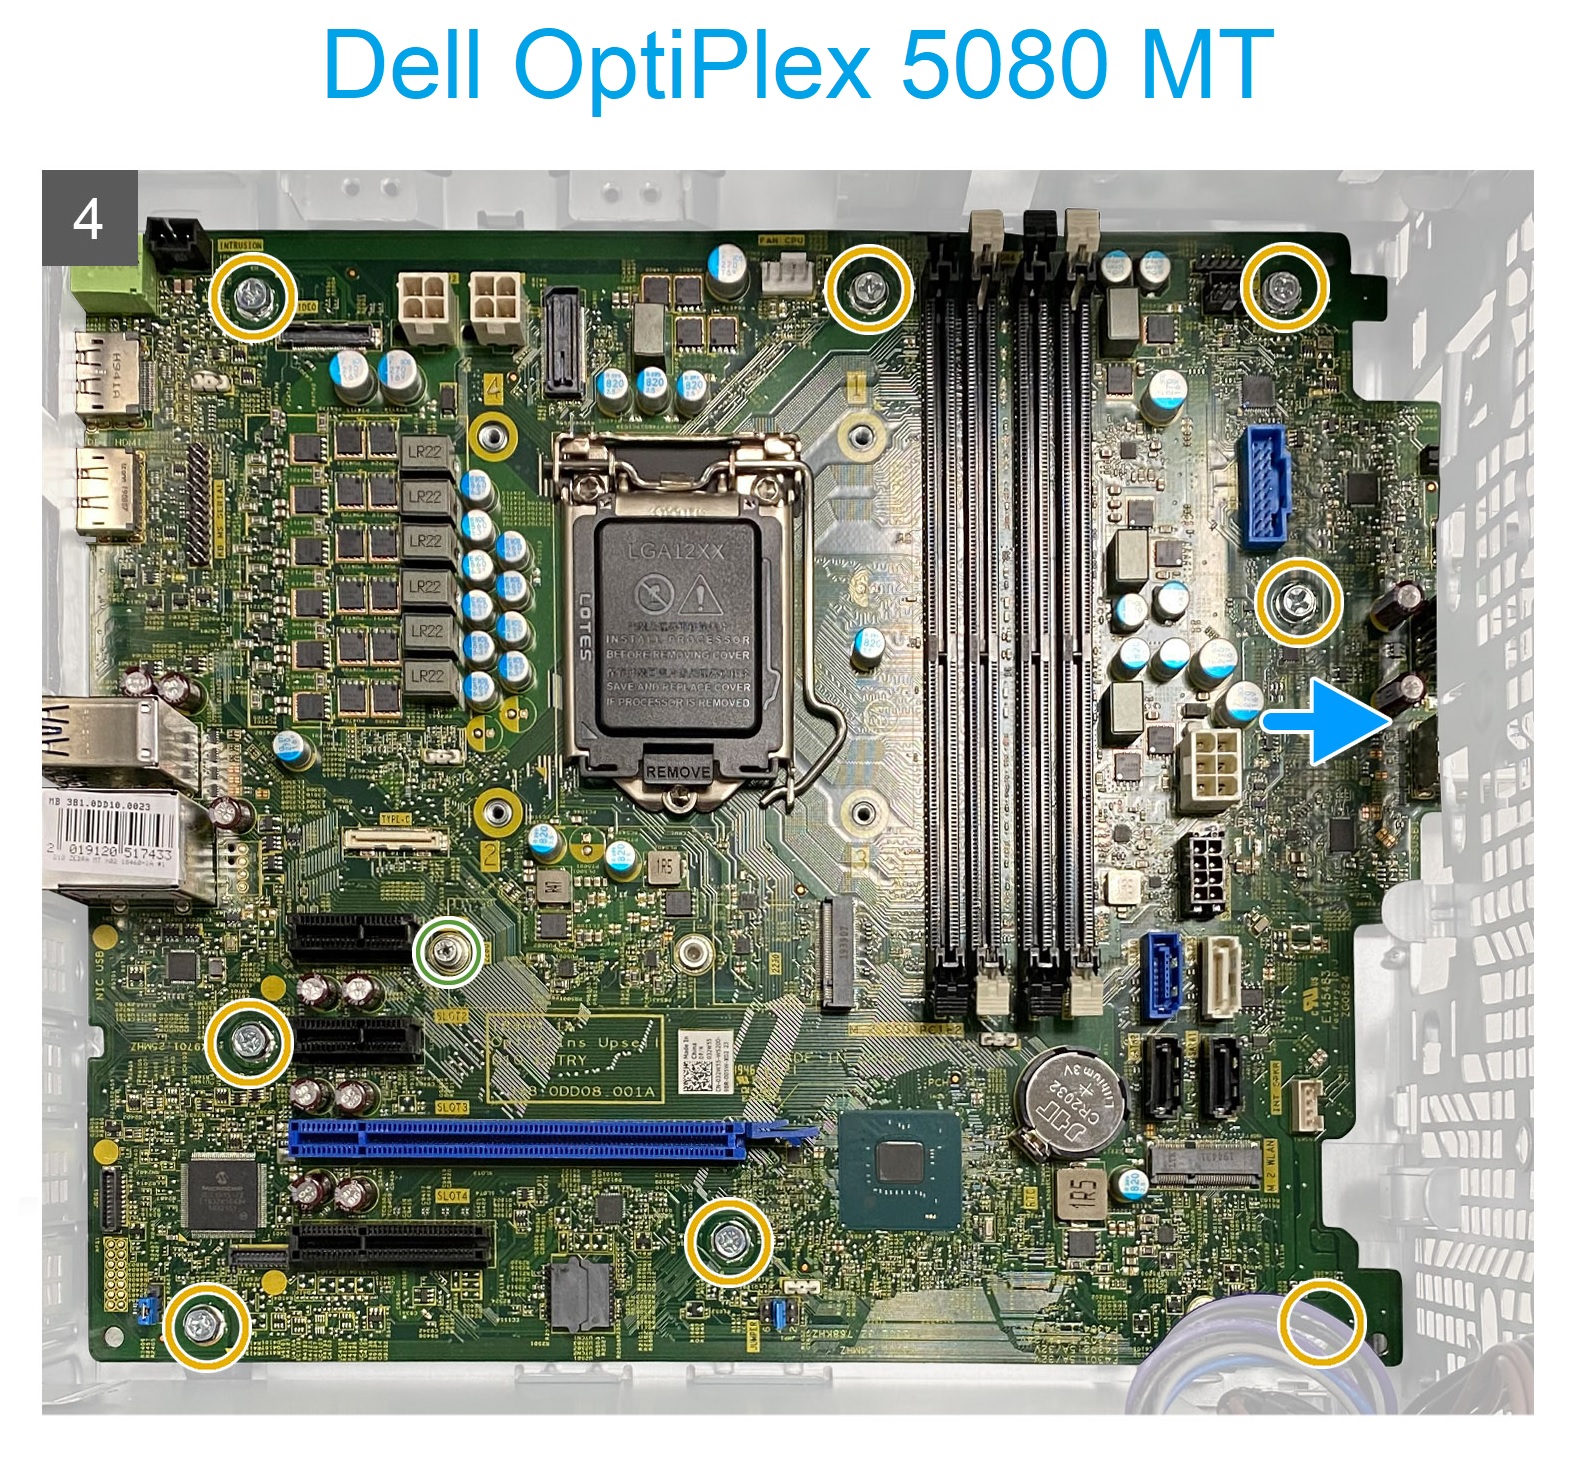 Dell_OptiPlex_5080_MT_motherboard.jpg motherboard layout